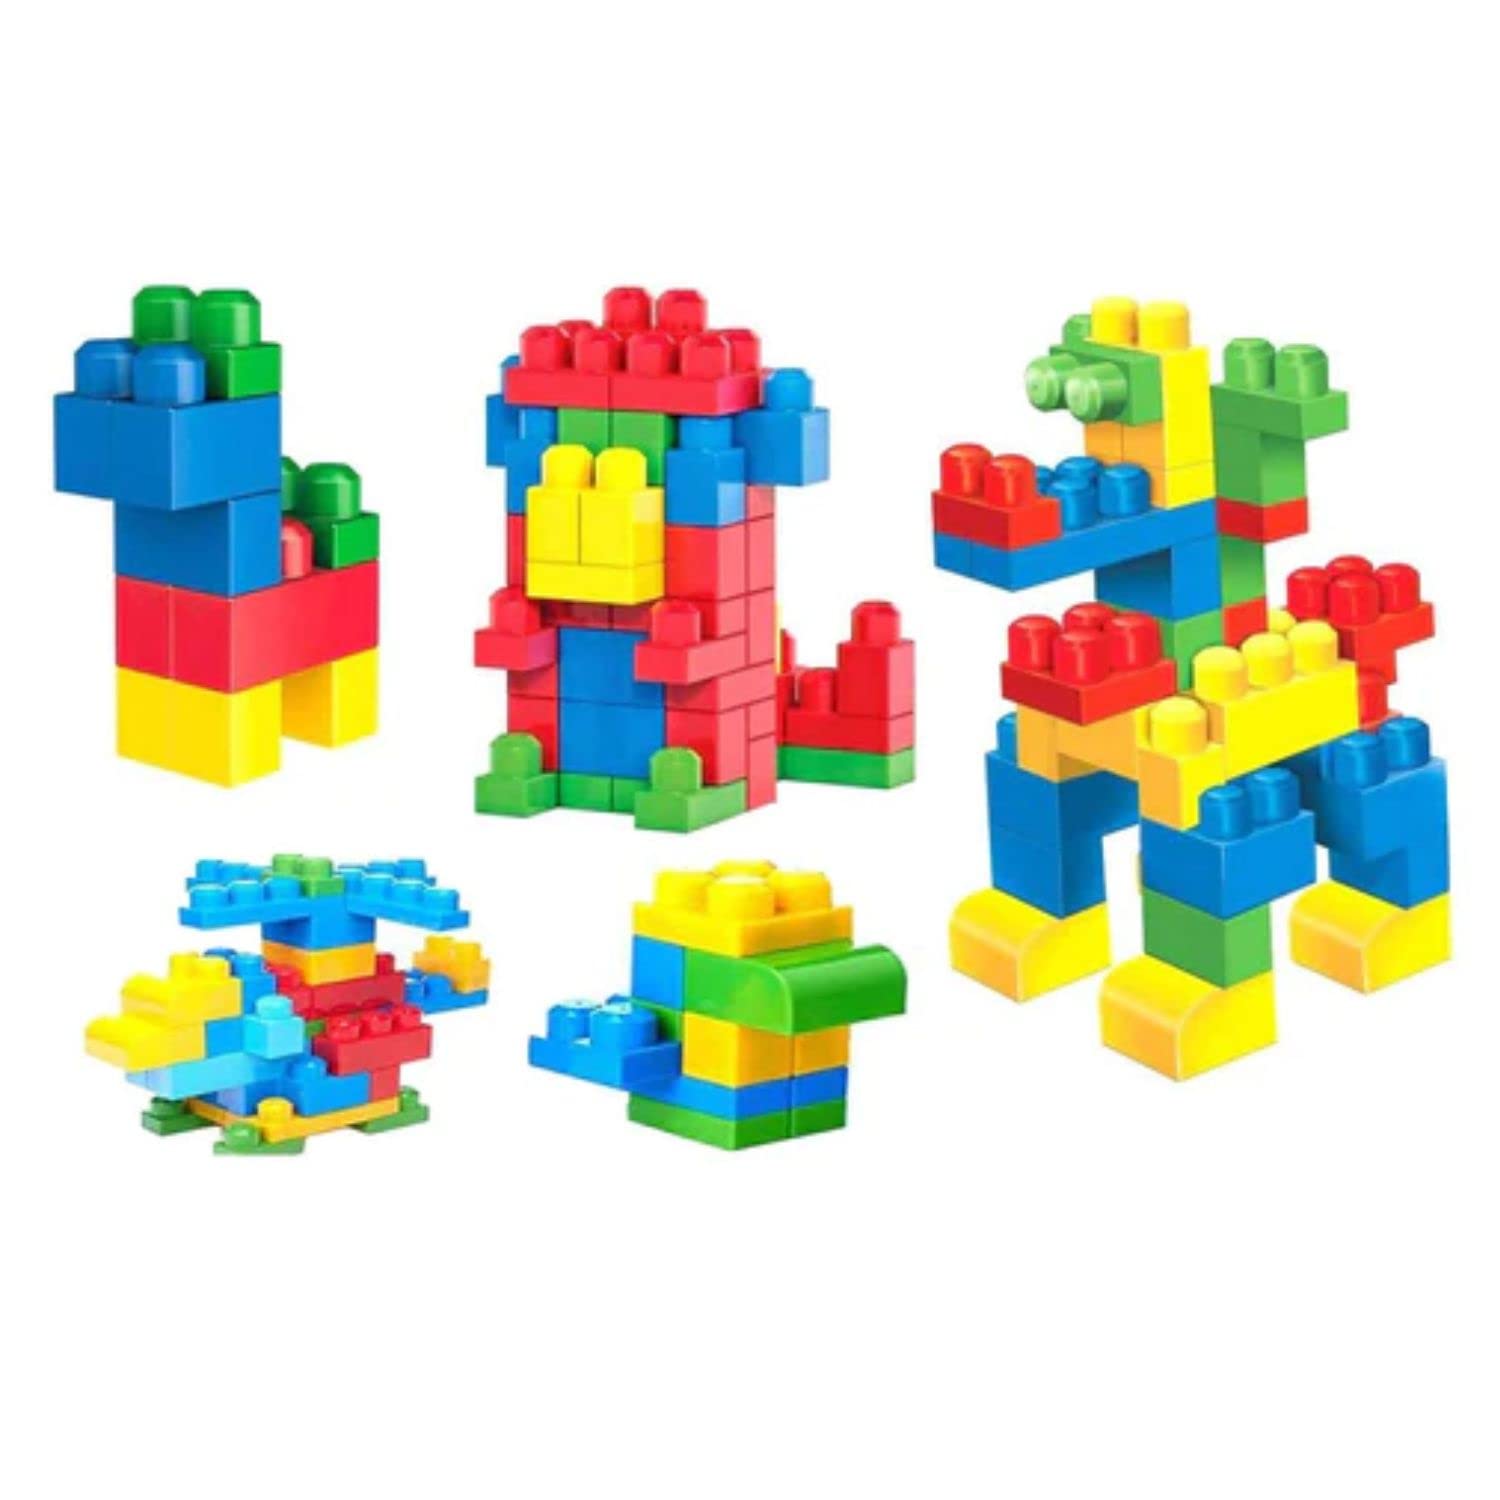 Kids Mandi - 88 pcs building blocks educational toy.